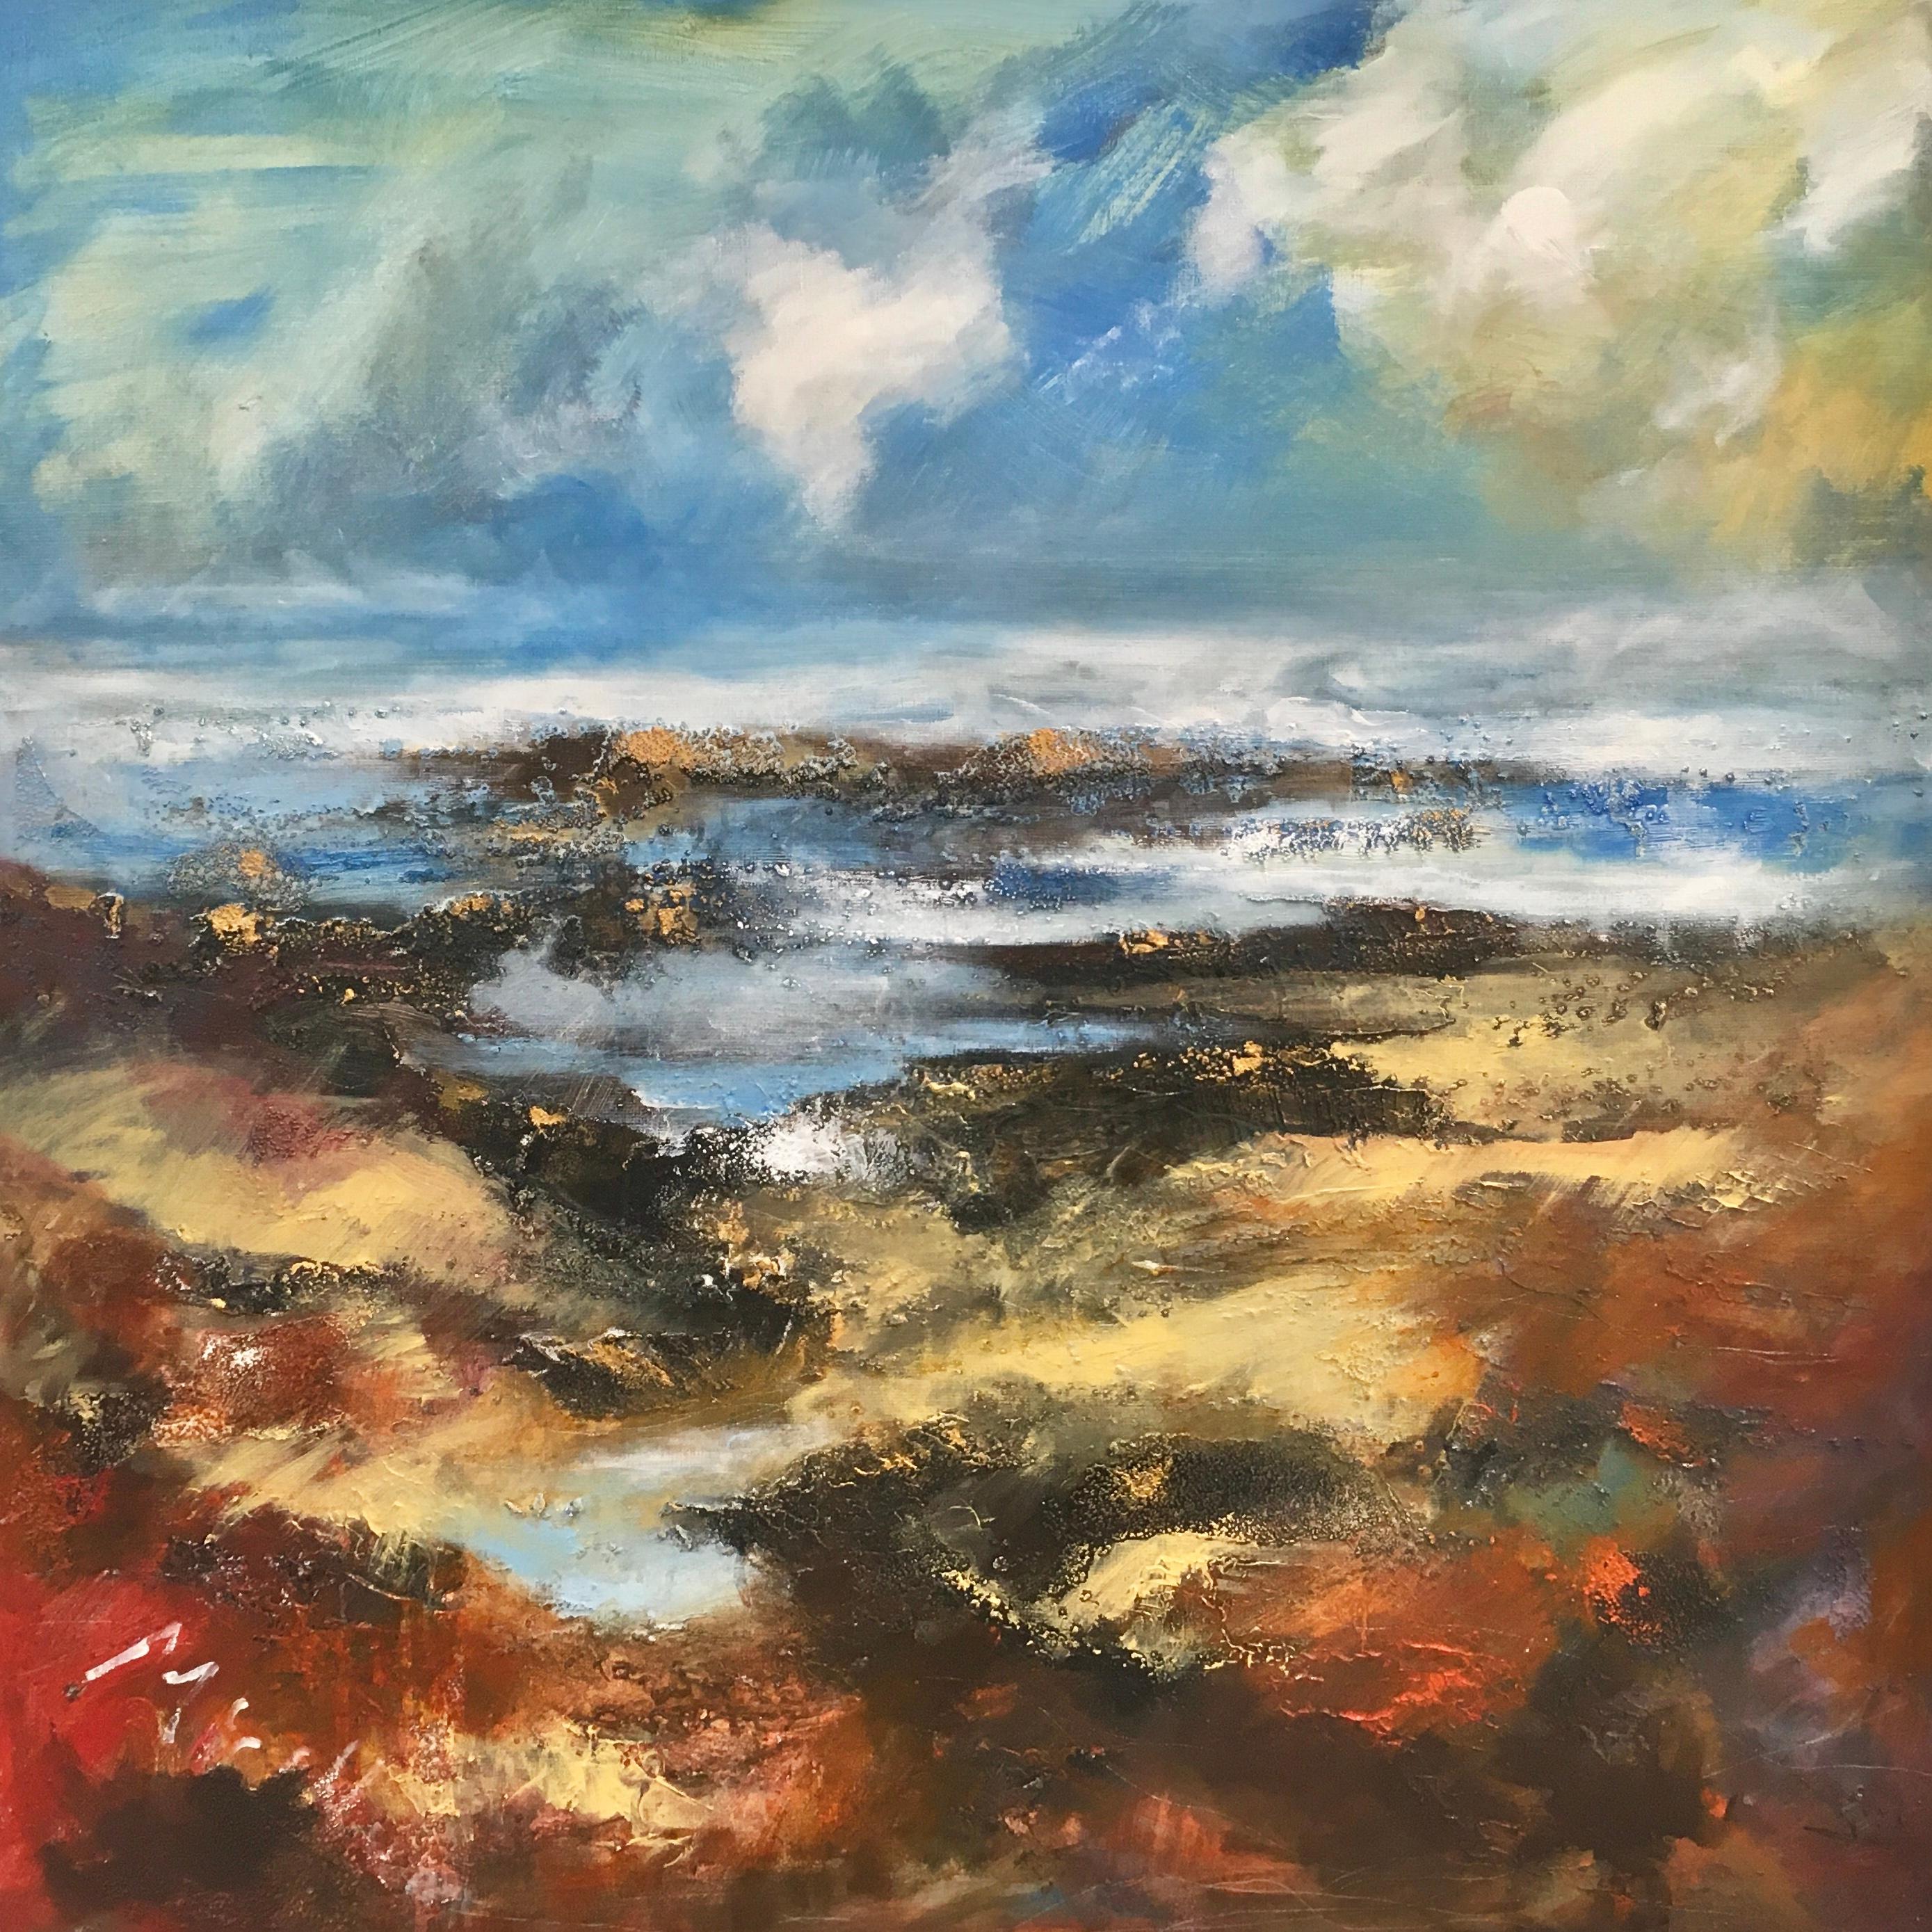 Traigh Arisaig - Contemporary Seascape Painting by Mark McCallum